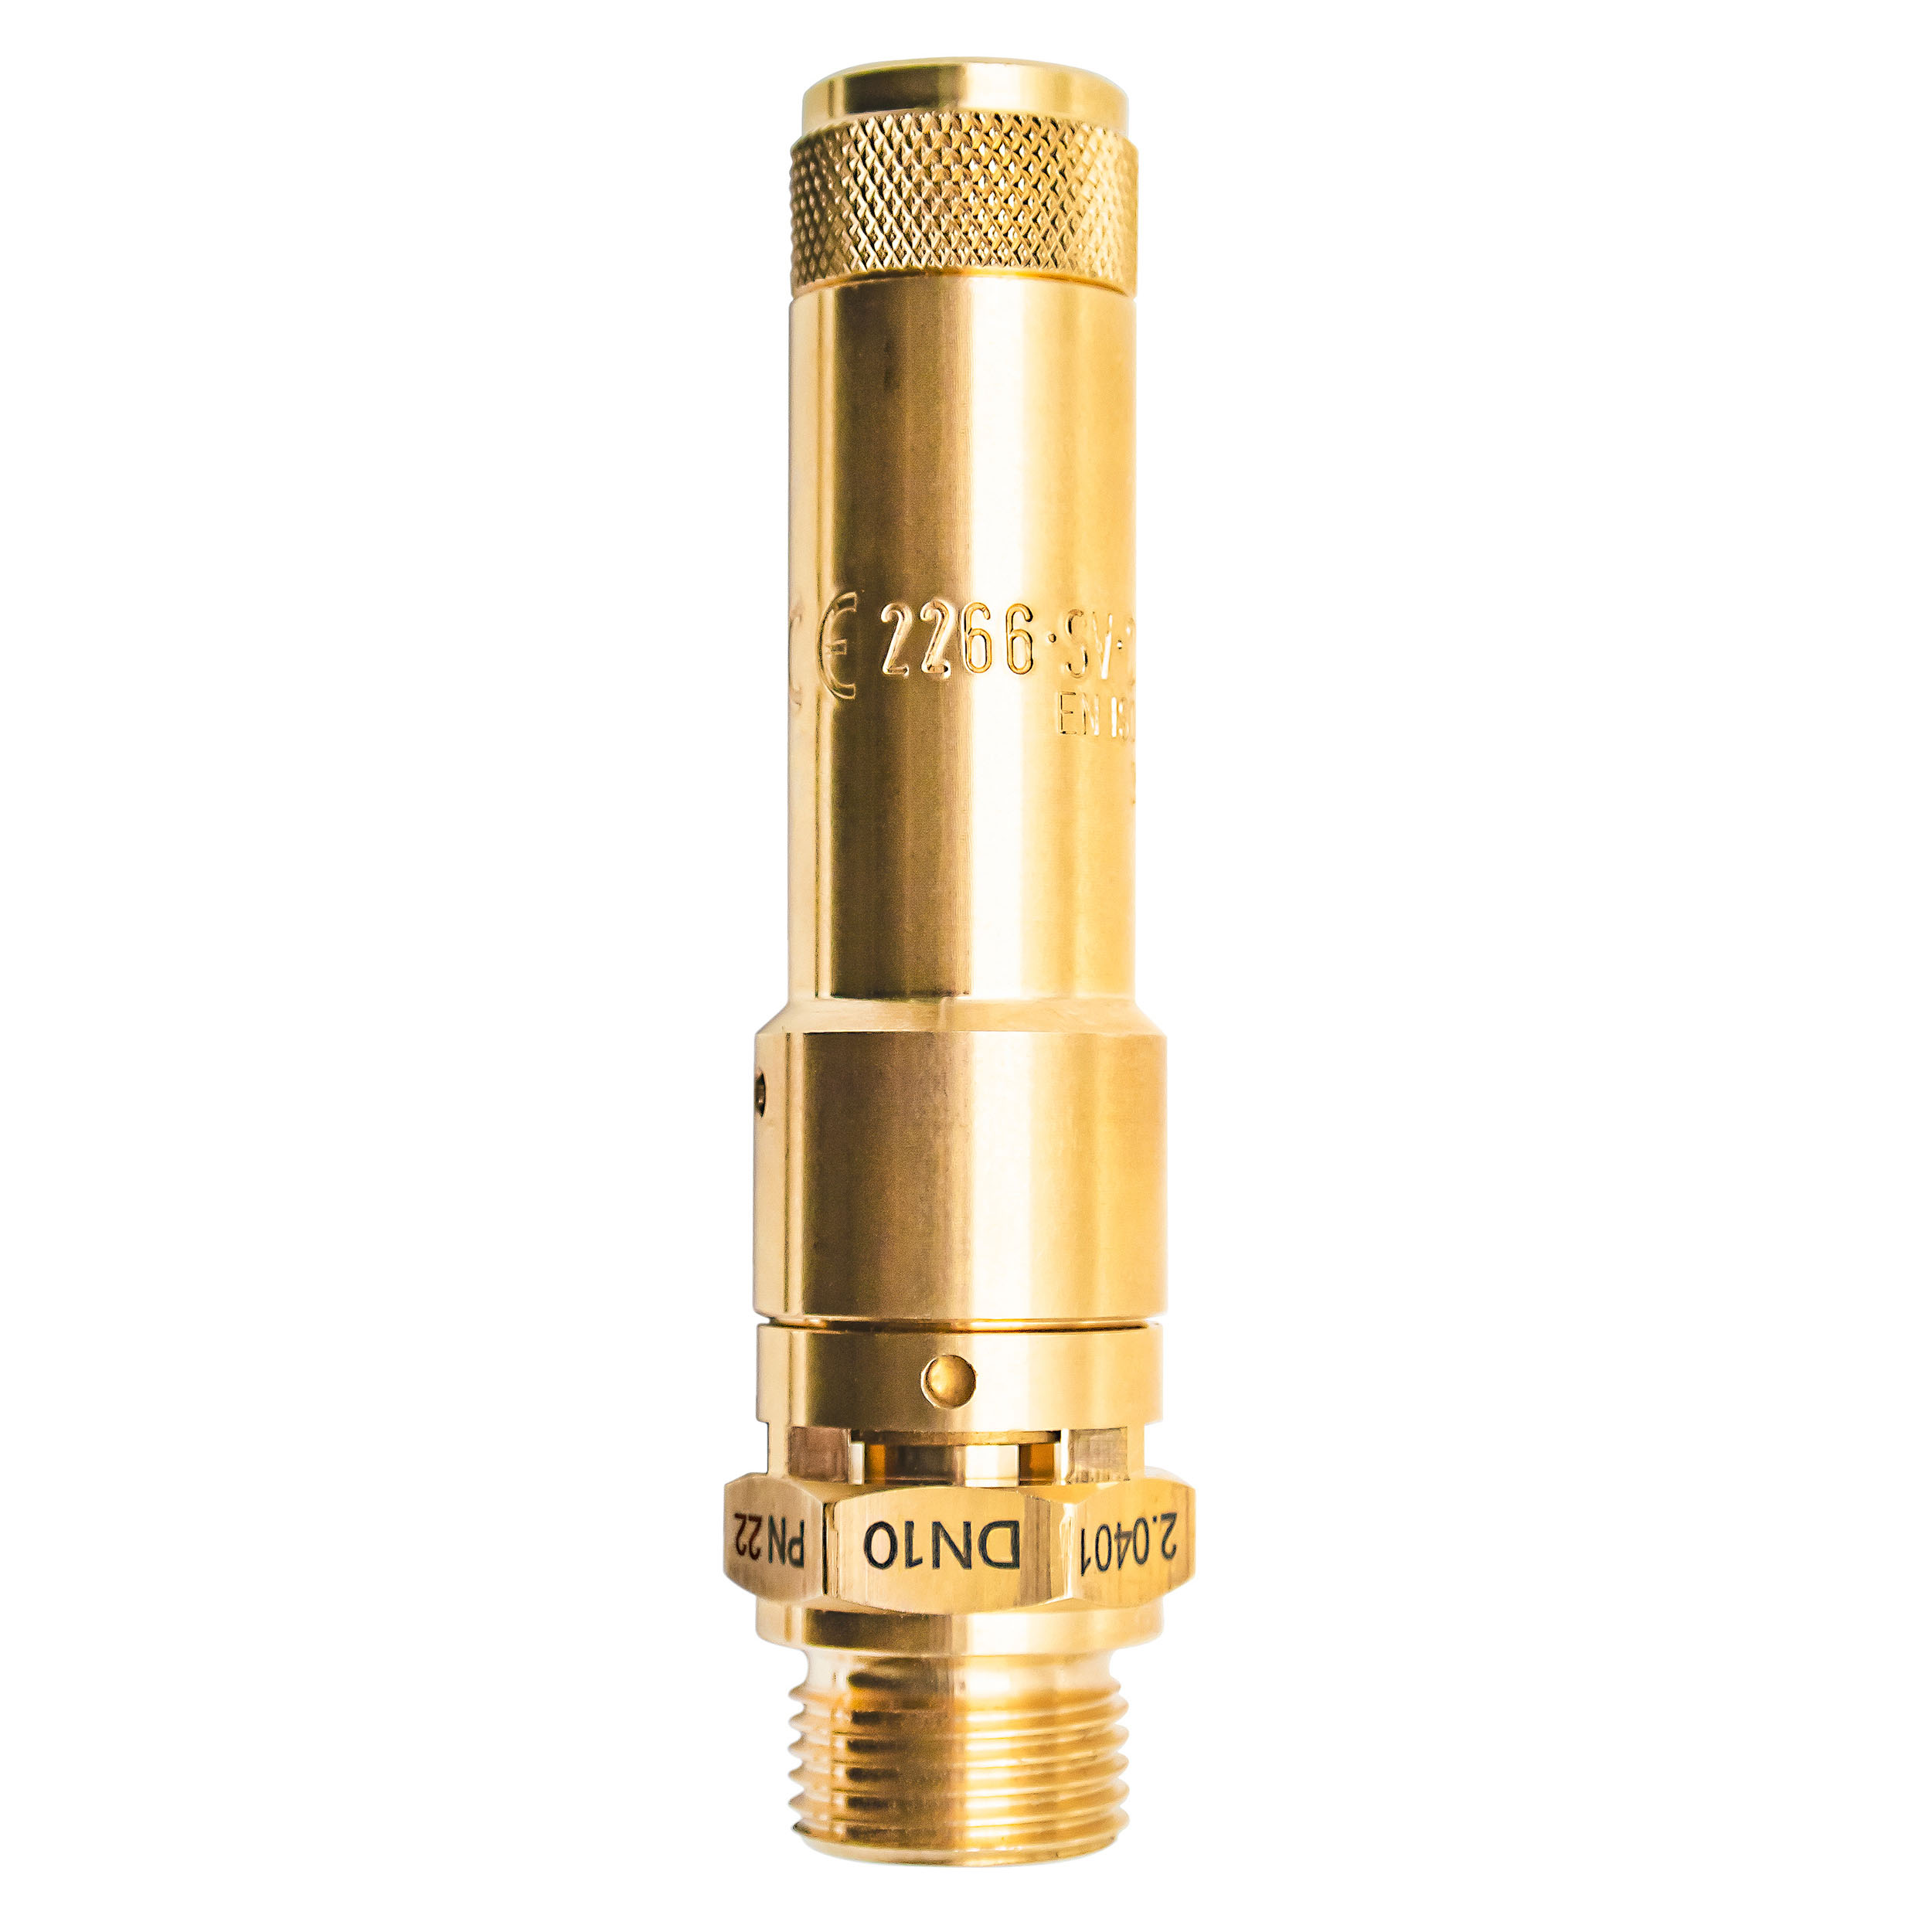 Component-tested safety valve DN 10, G½, pressure: 8.6-11.5 bar